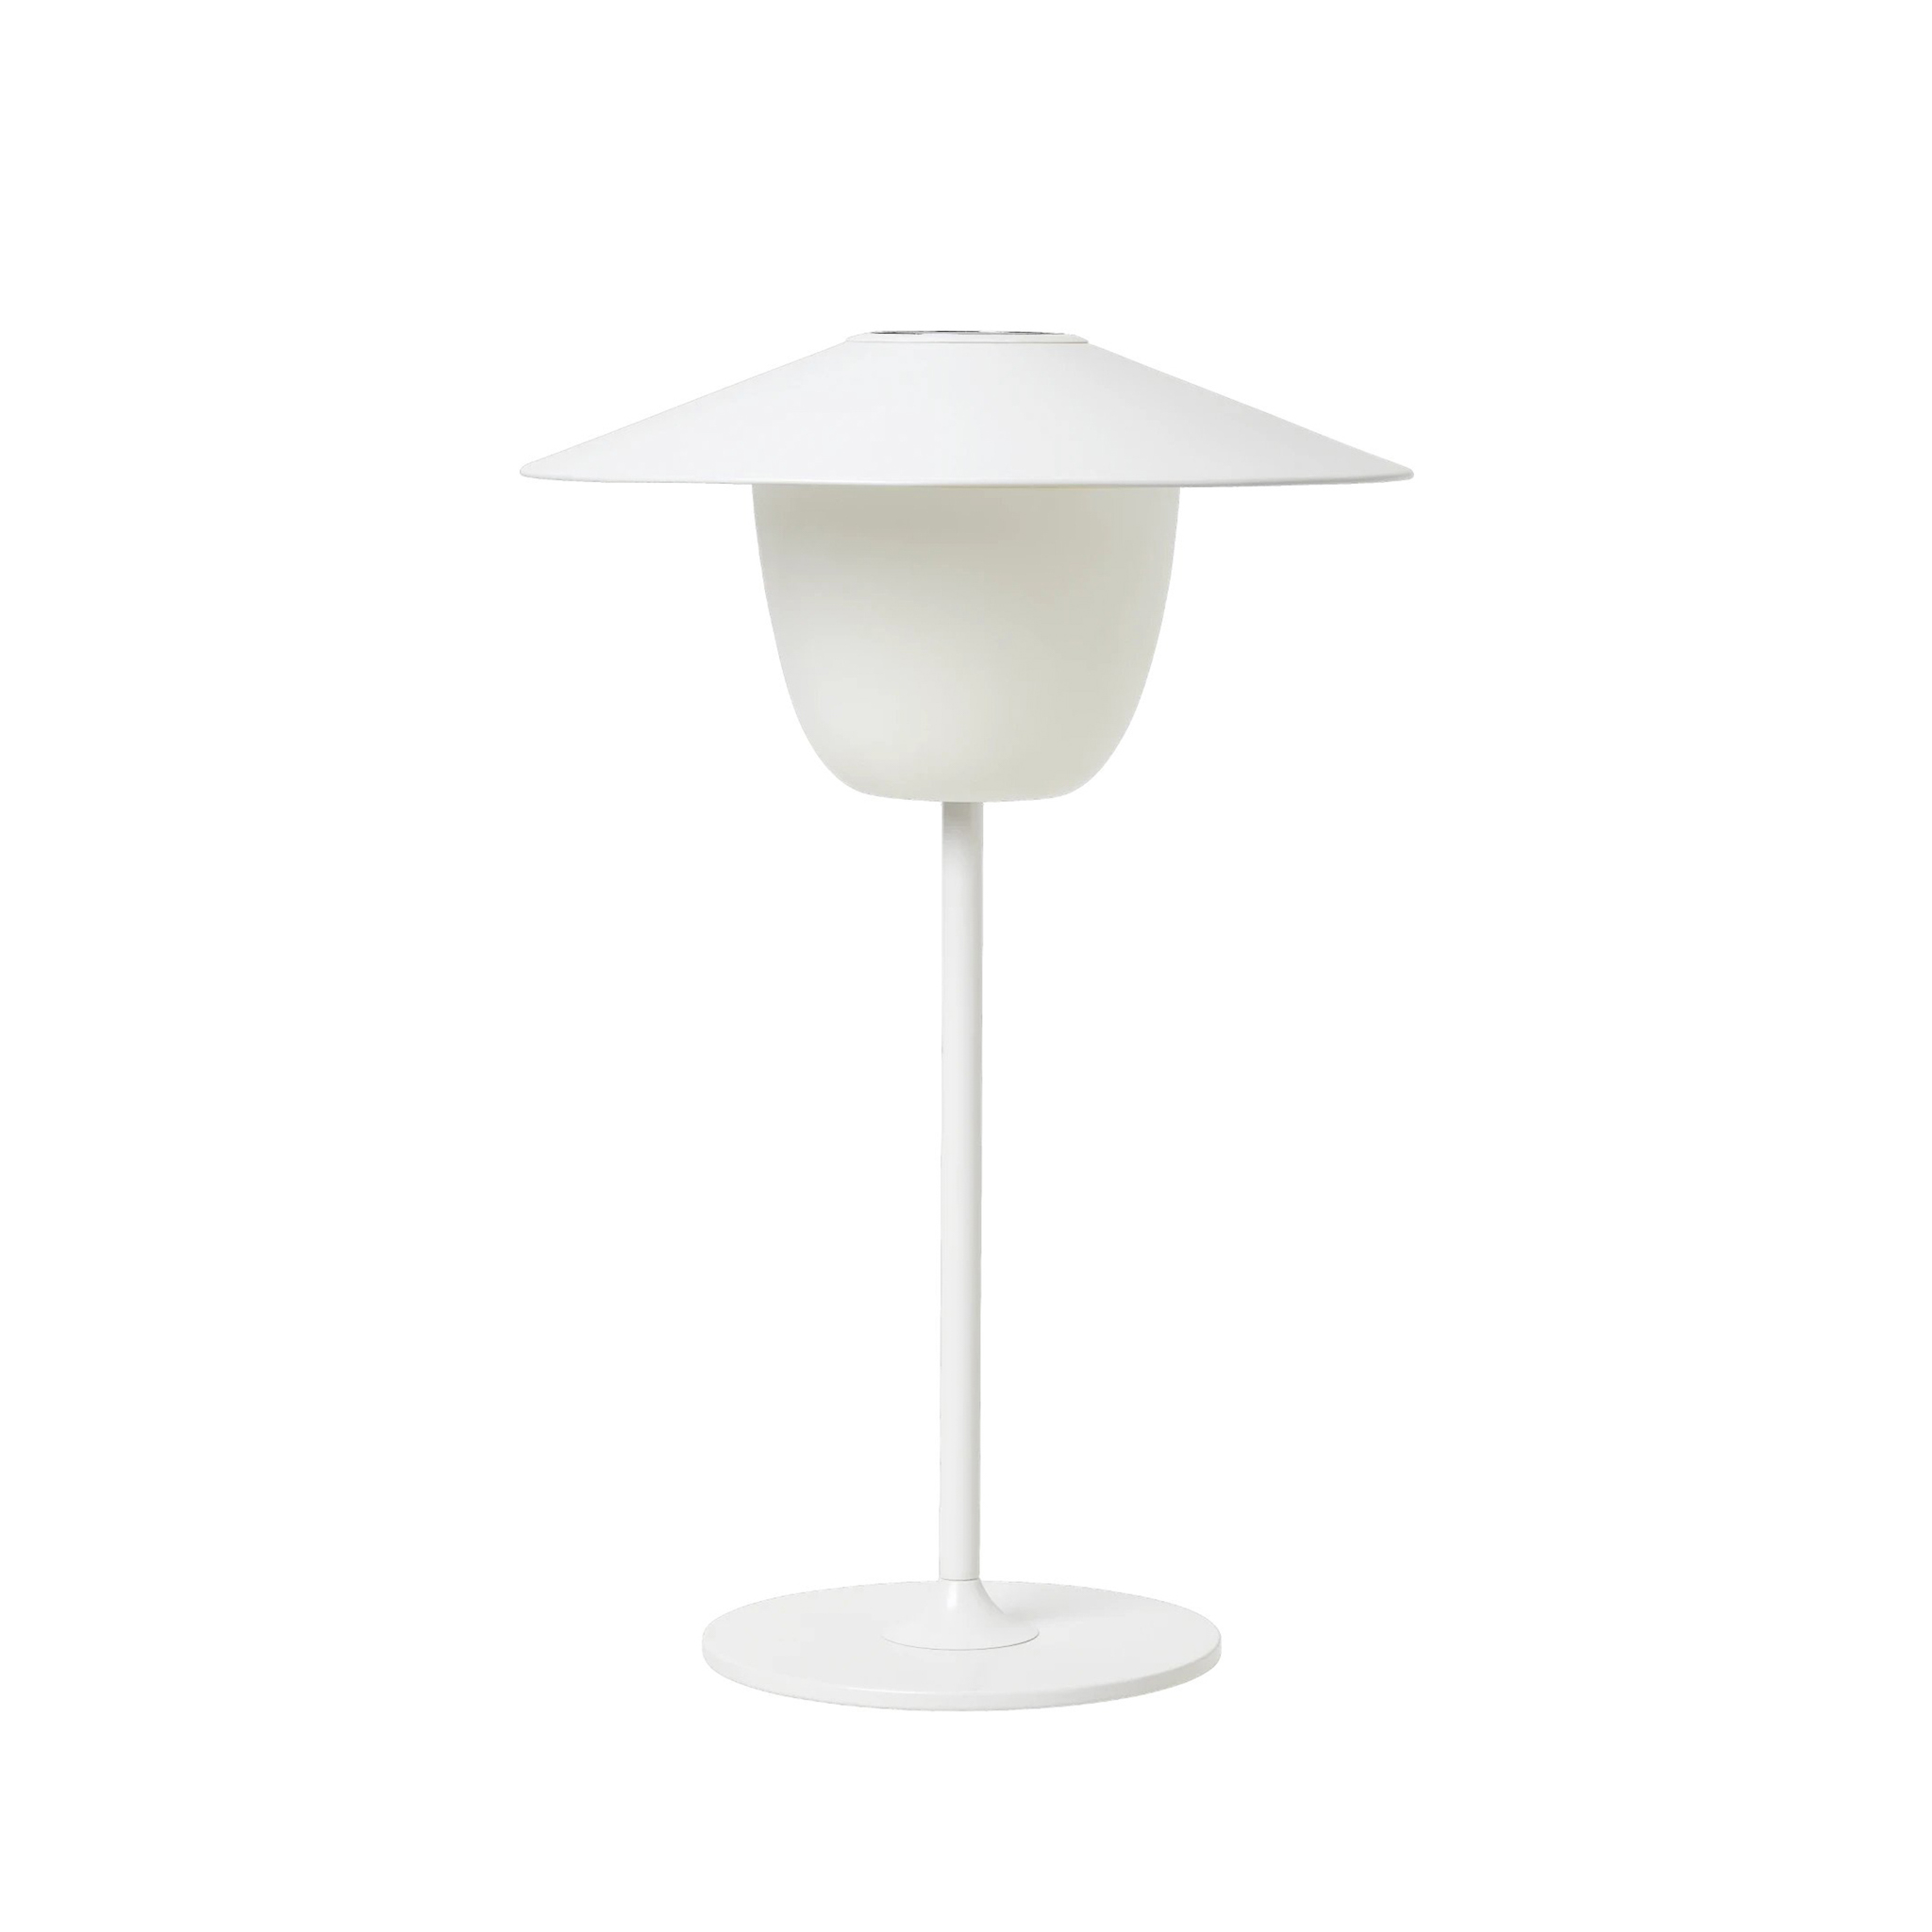 BLOMUS // ANI LAMP - MOBILE LED TABLE LAMP | WHITE